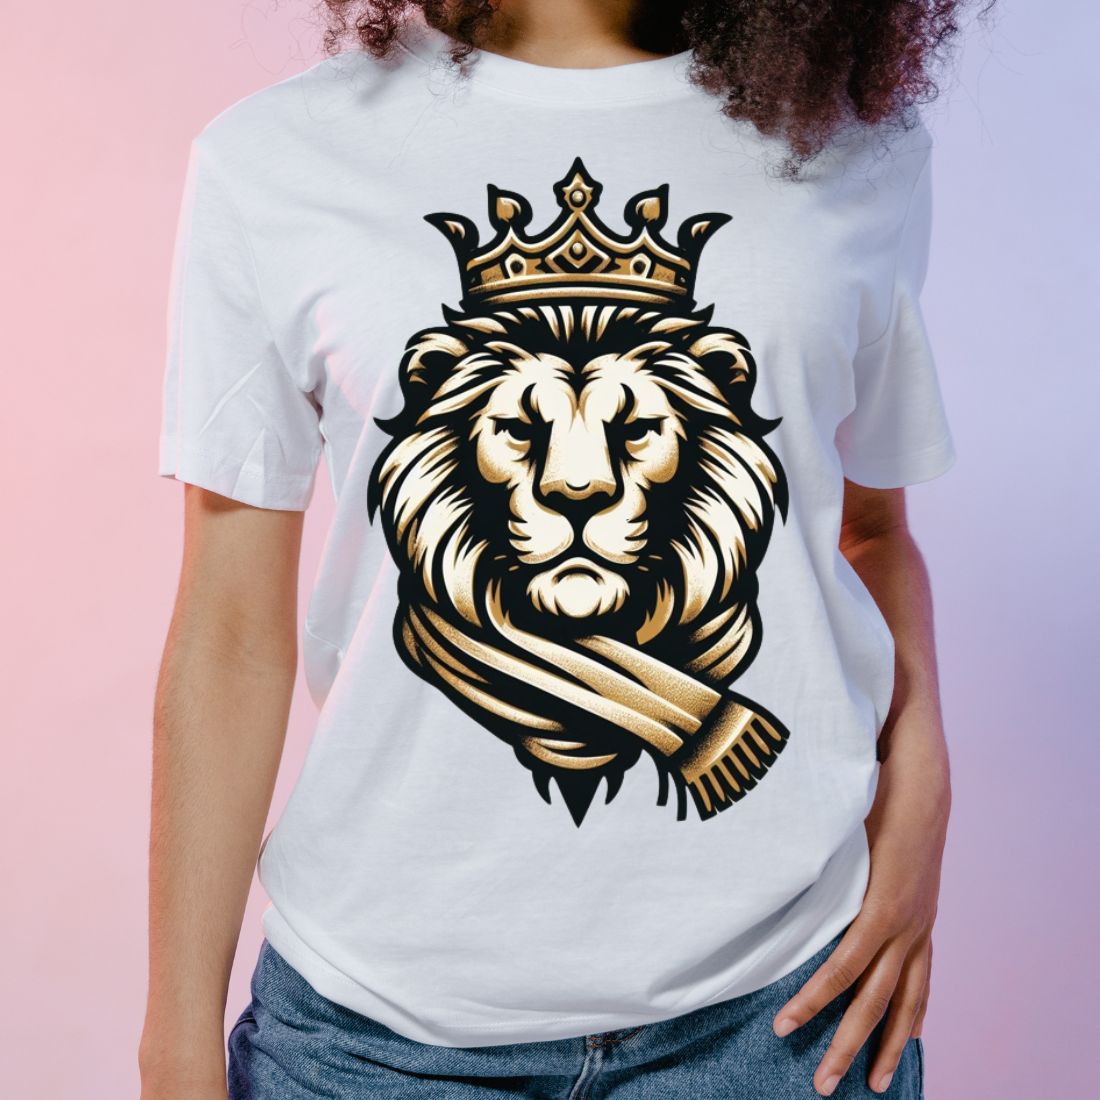 King lion design cover image.